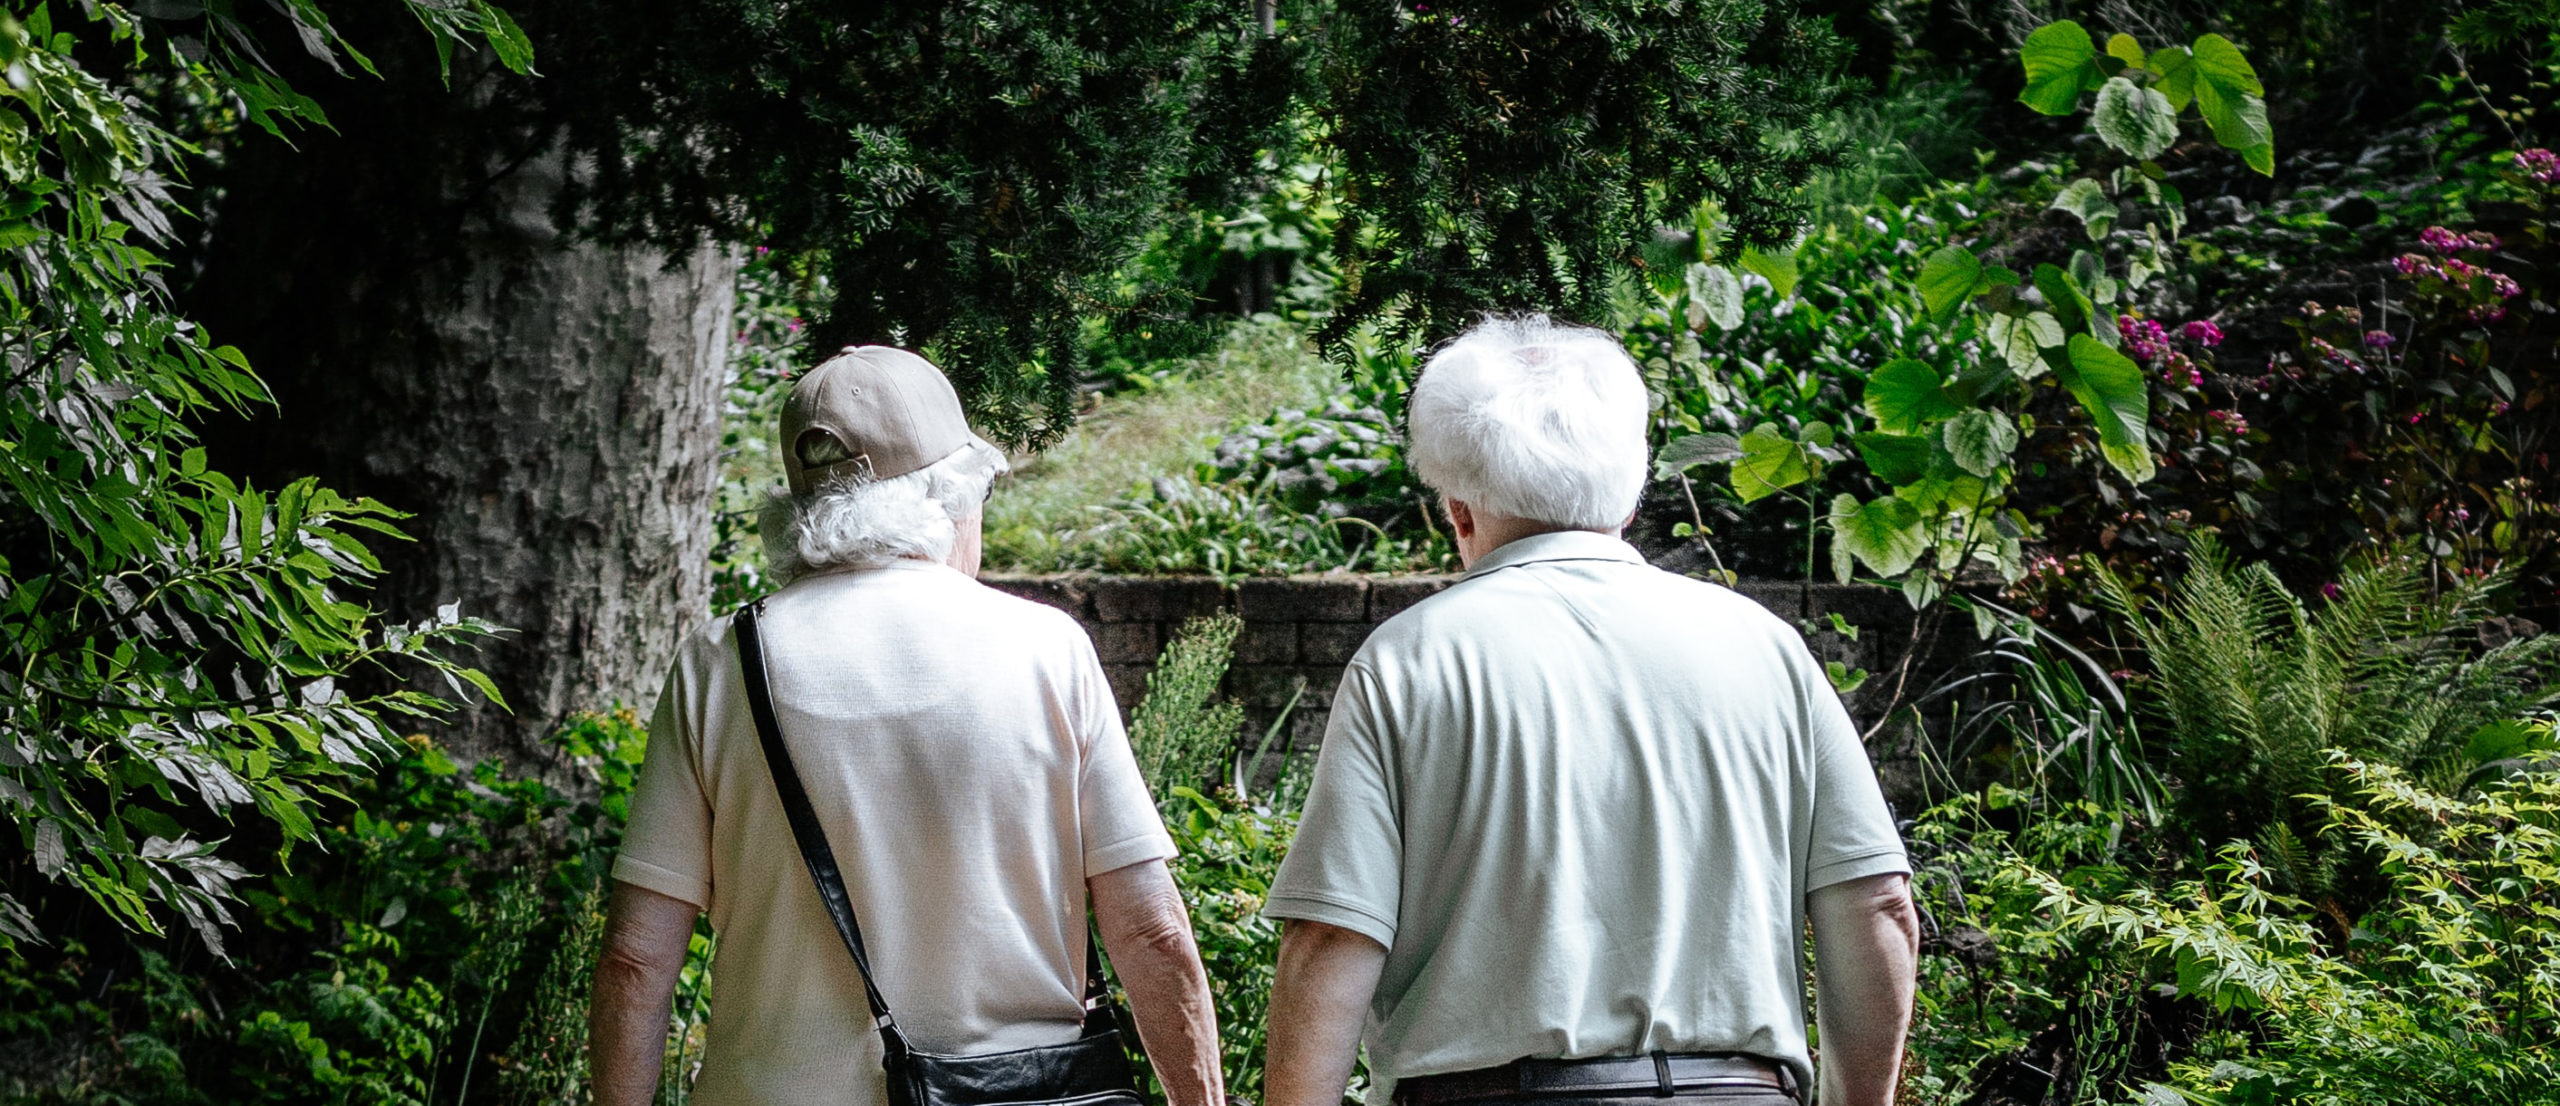 An elderly couple takes a walk